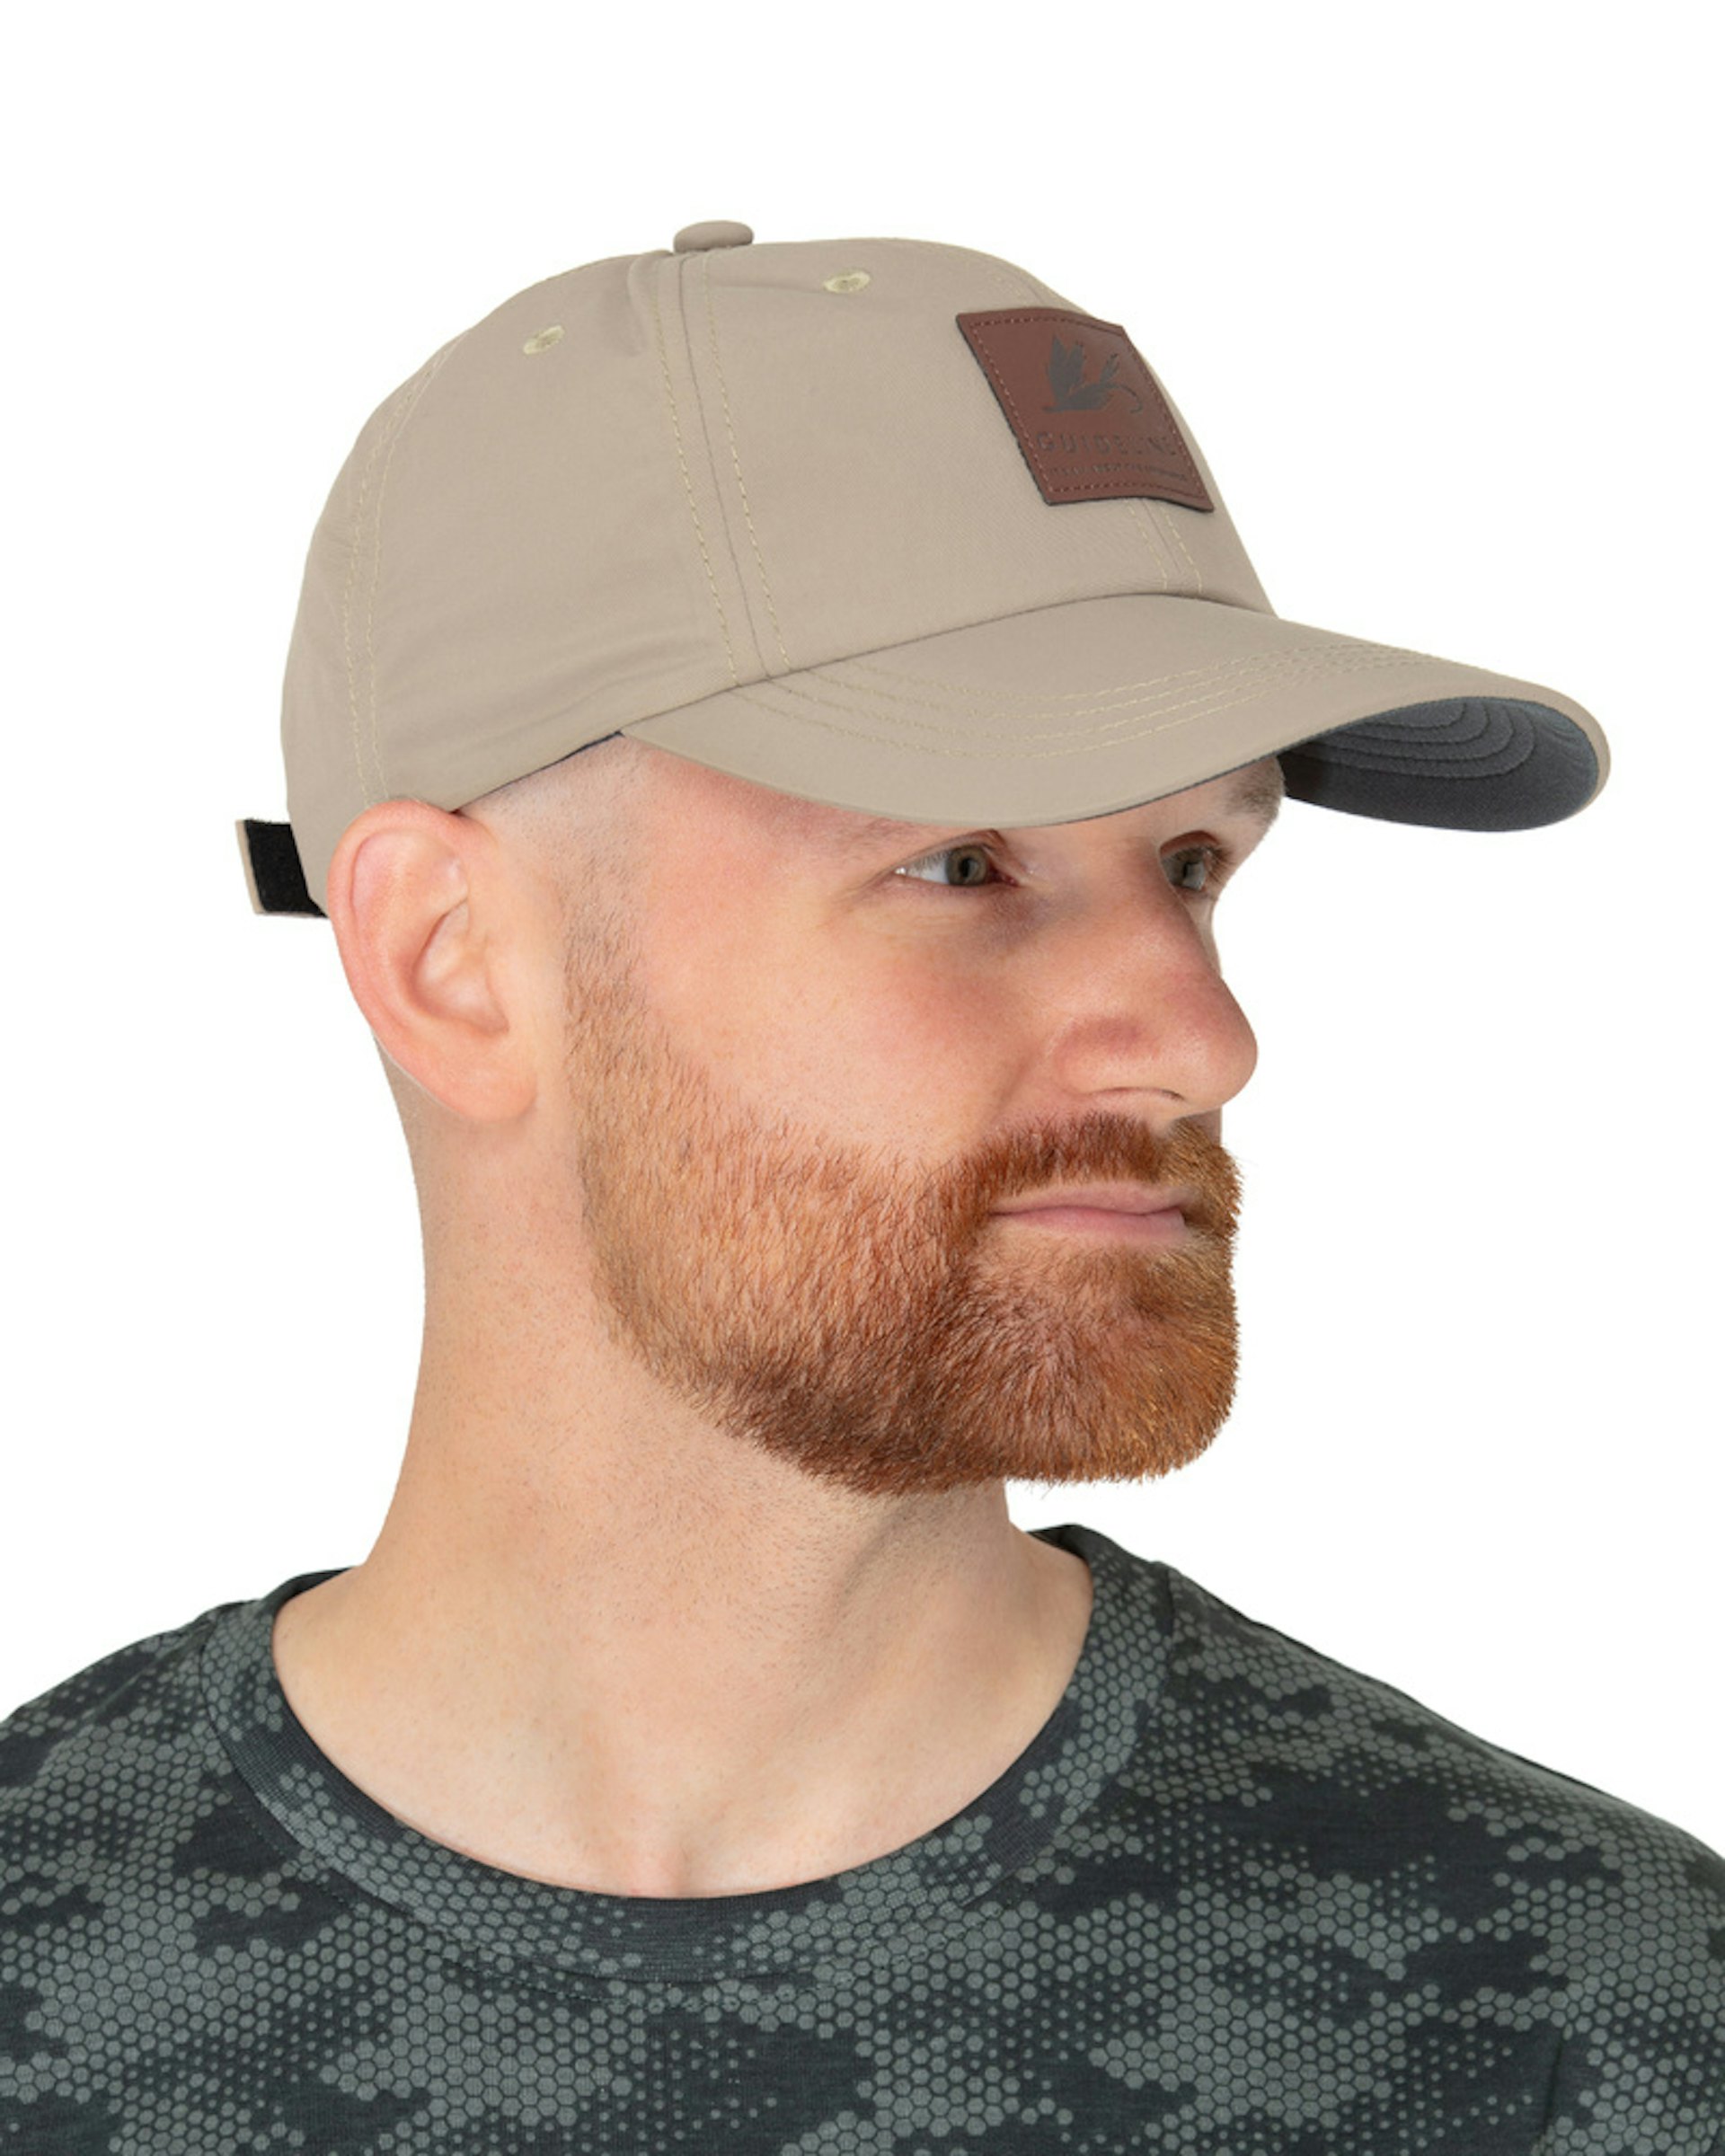 Headwear - Supplex caps - Trucker caps - Fishing caps